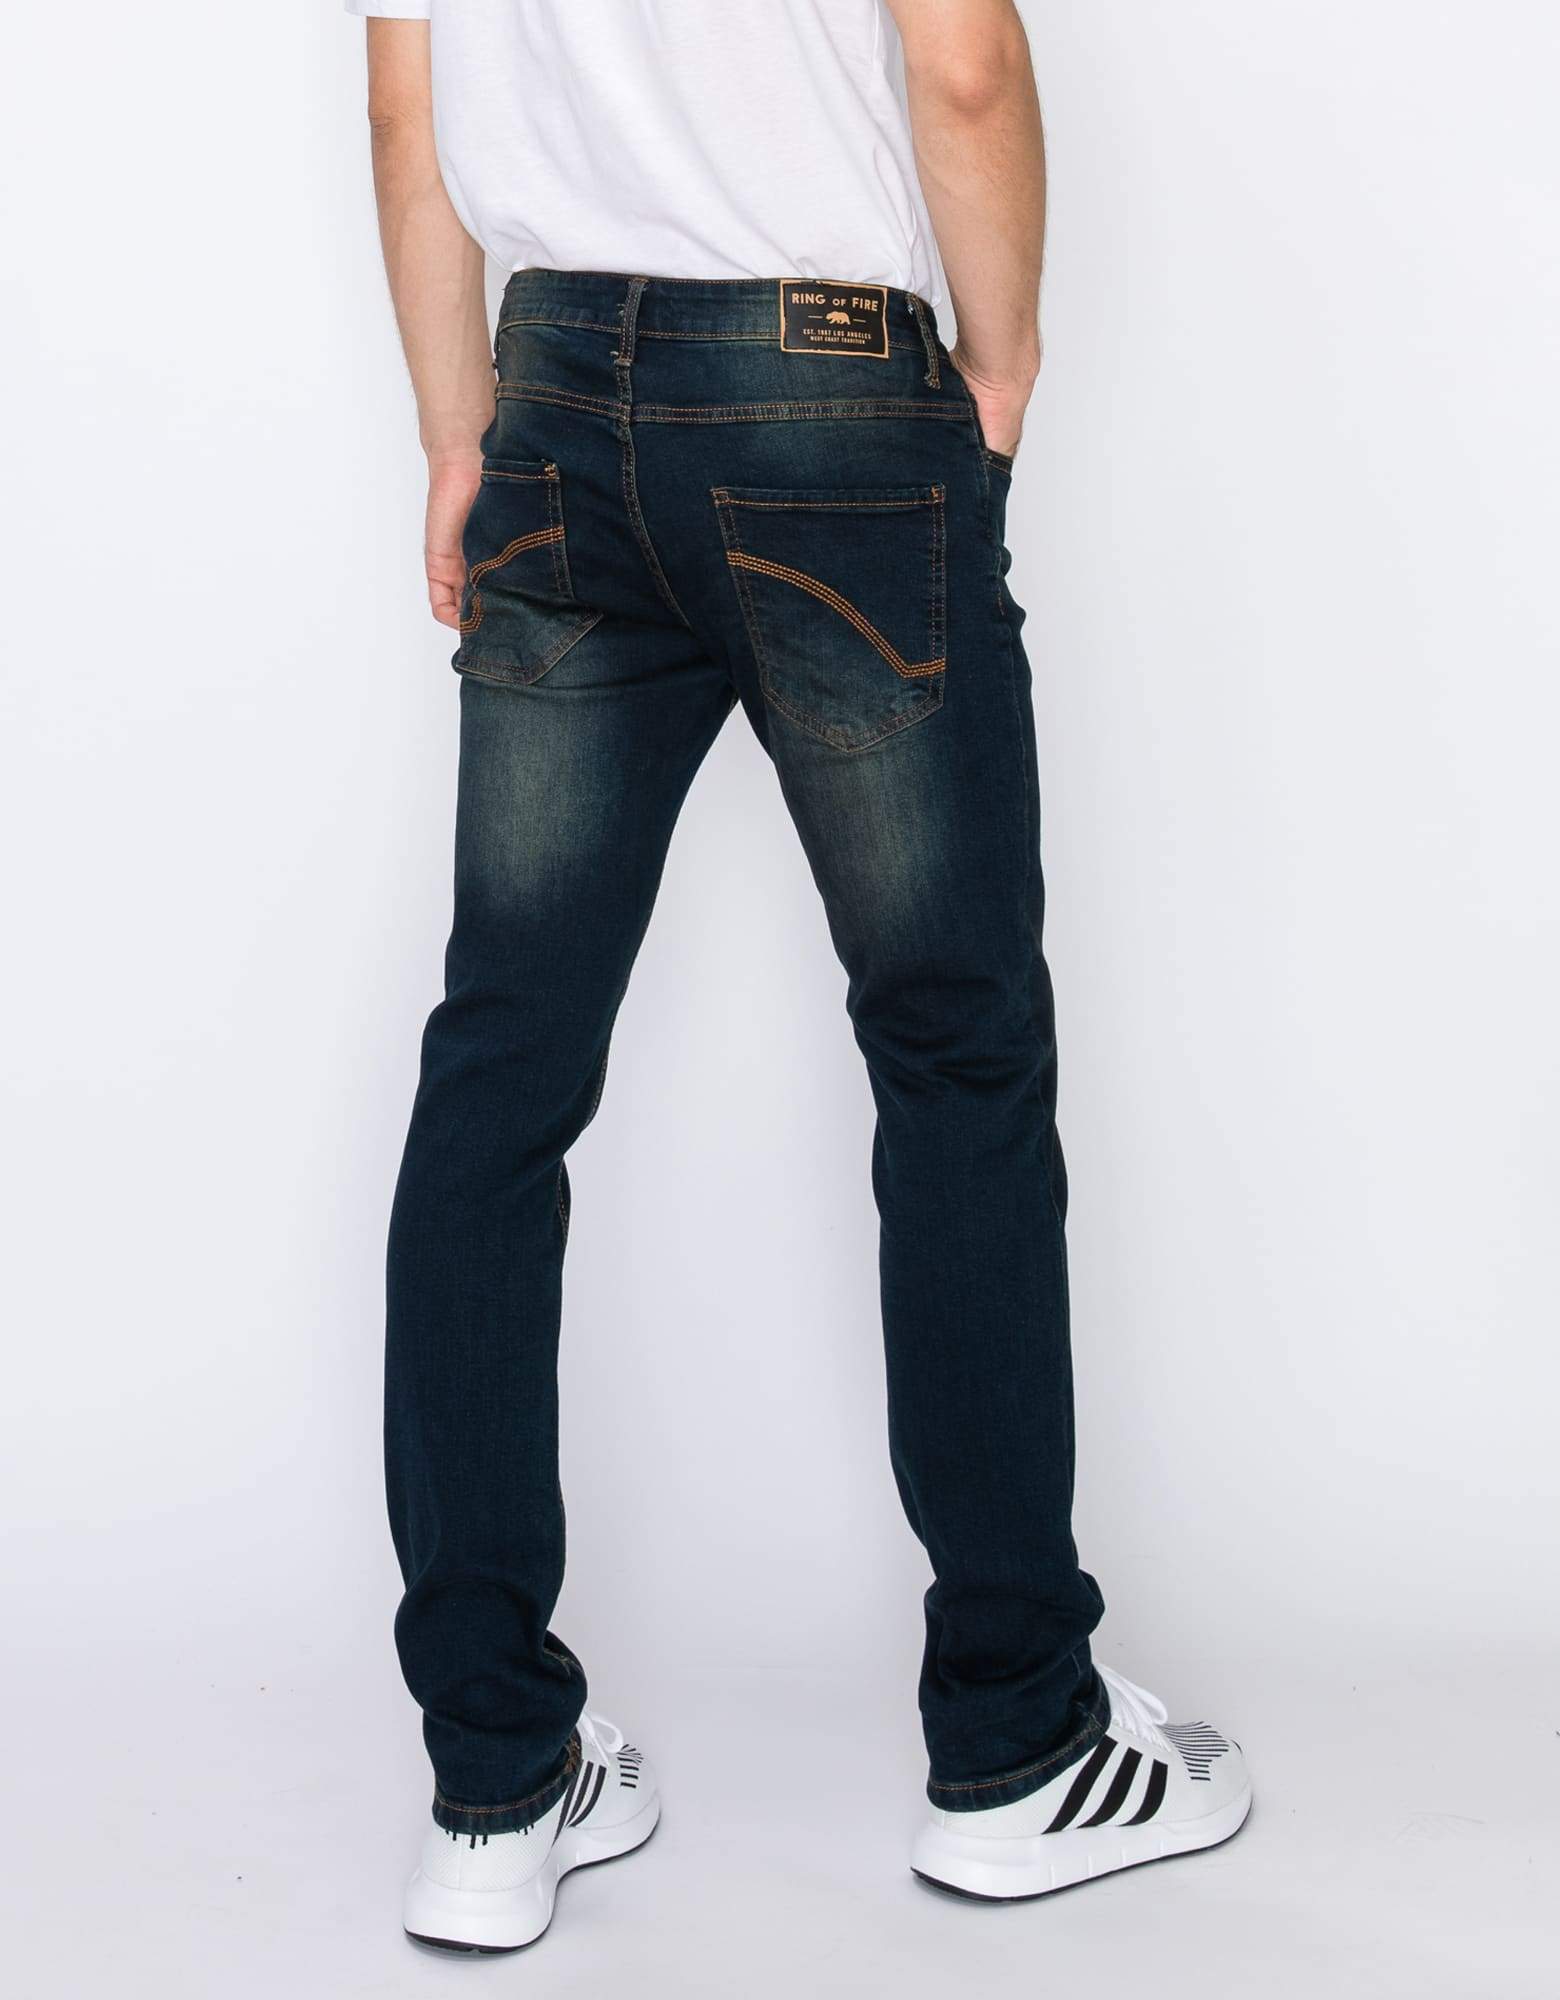 RING OF FIRE Men's 5 Pockets Slim Denim Stretch Jeans - image 5 of 6